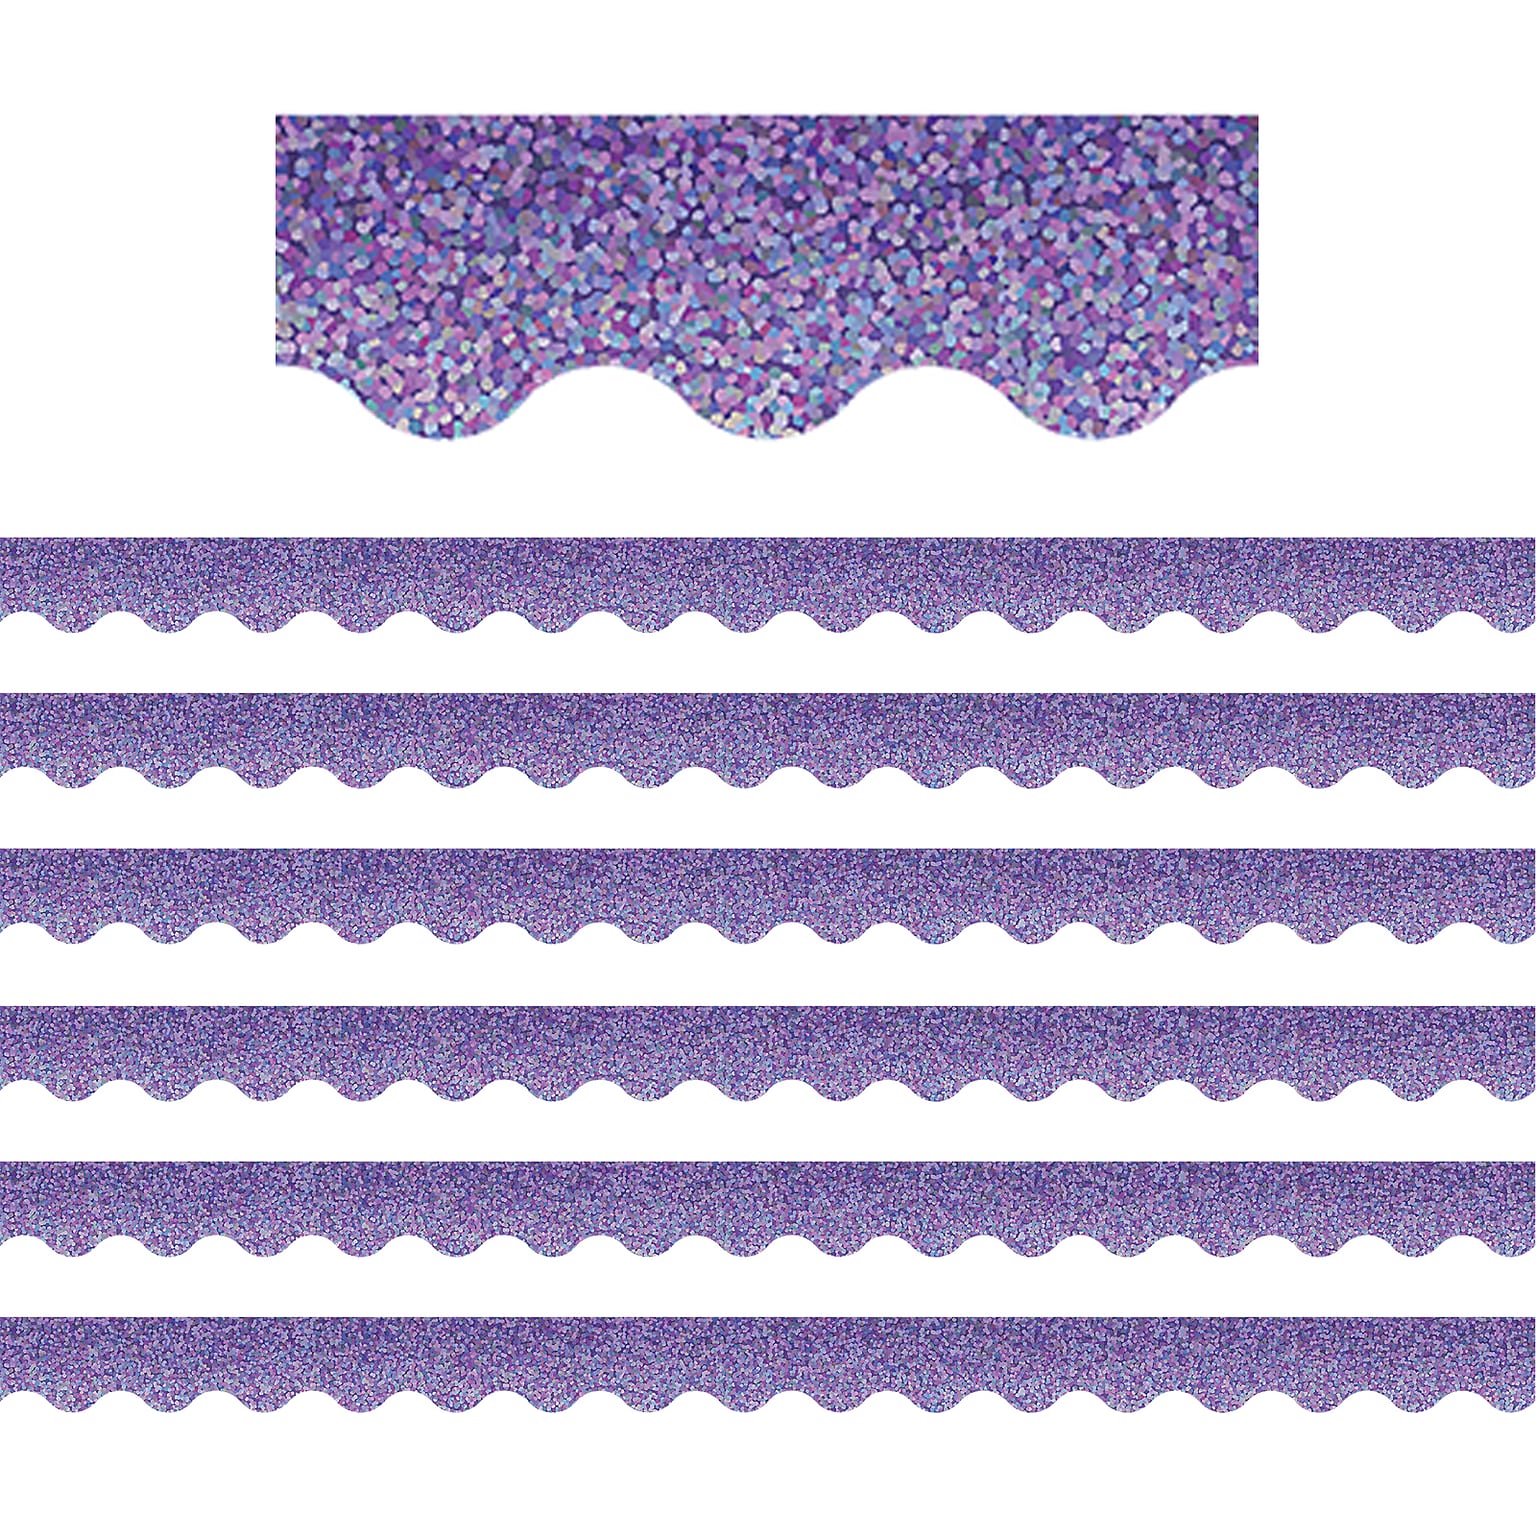 Teacher Created Resources Scalloped Border, 2.19 x 210, Purple Sparkle (TCR8793-6)